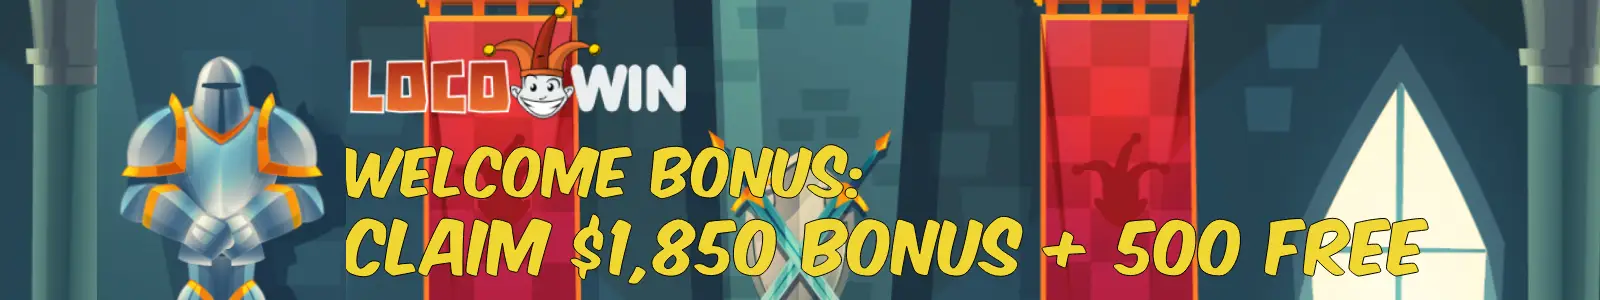 Locowin Casino welcome bonus